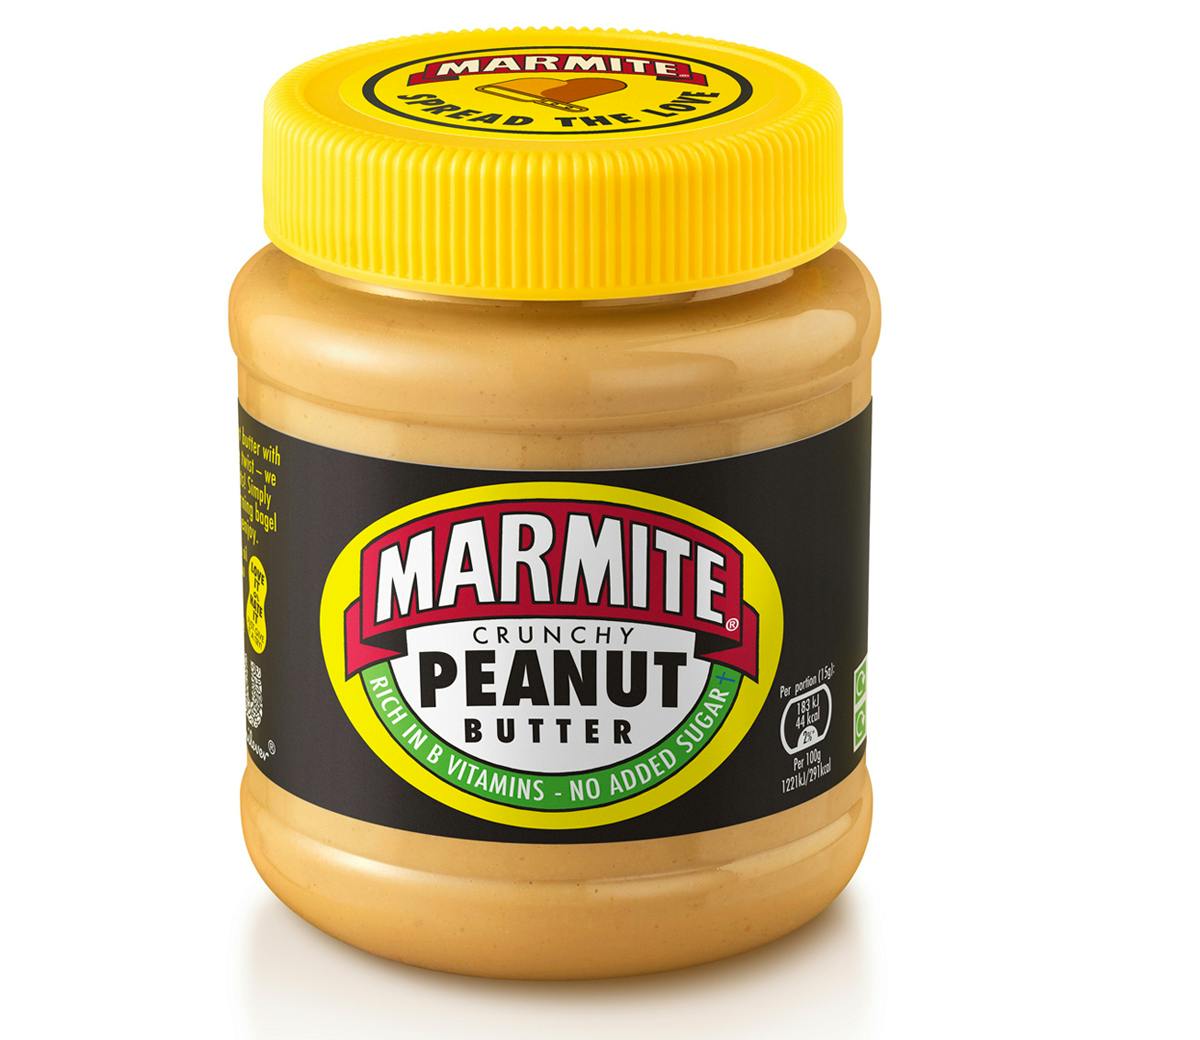 Marmite Peanut Butter